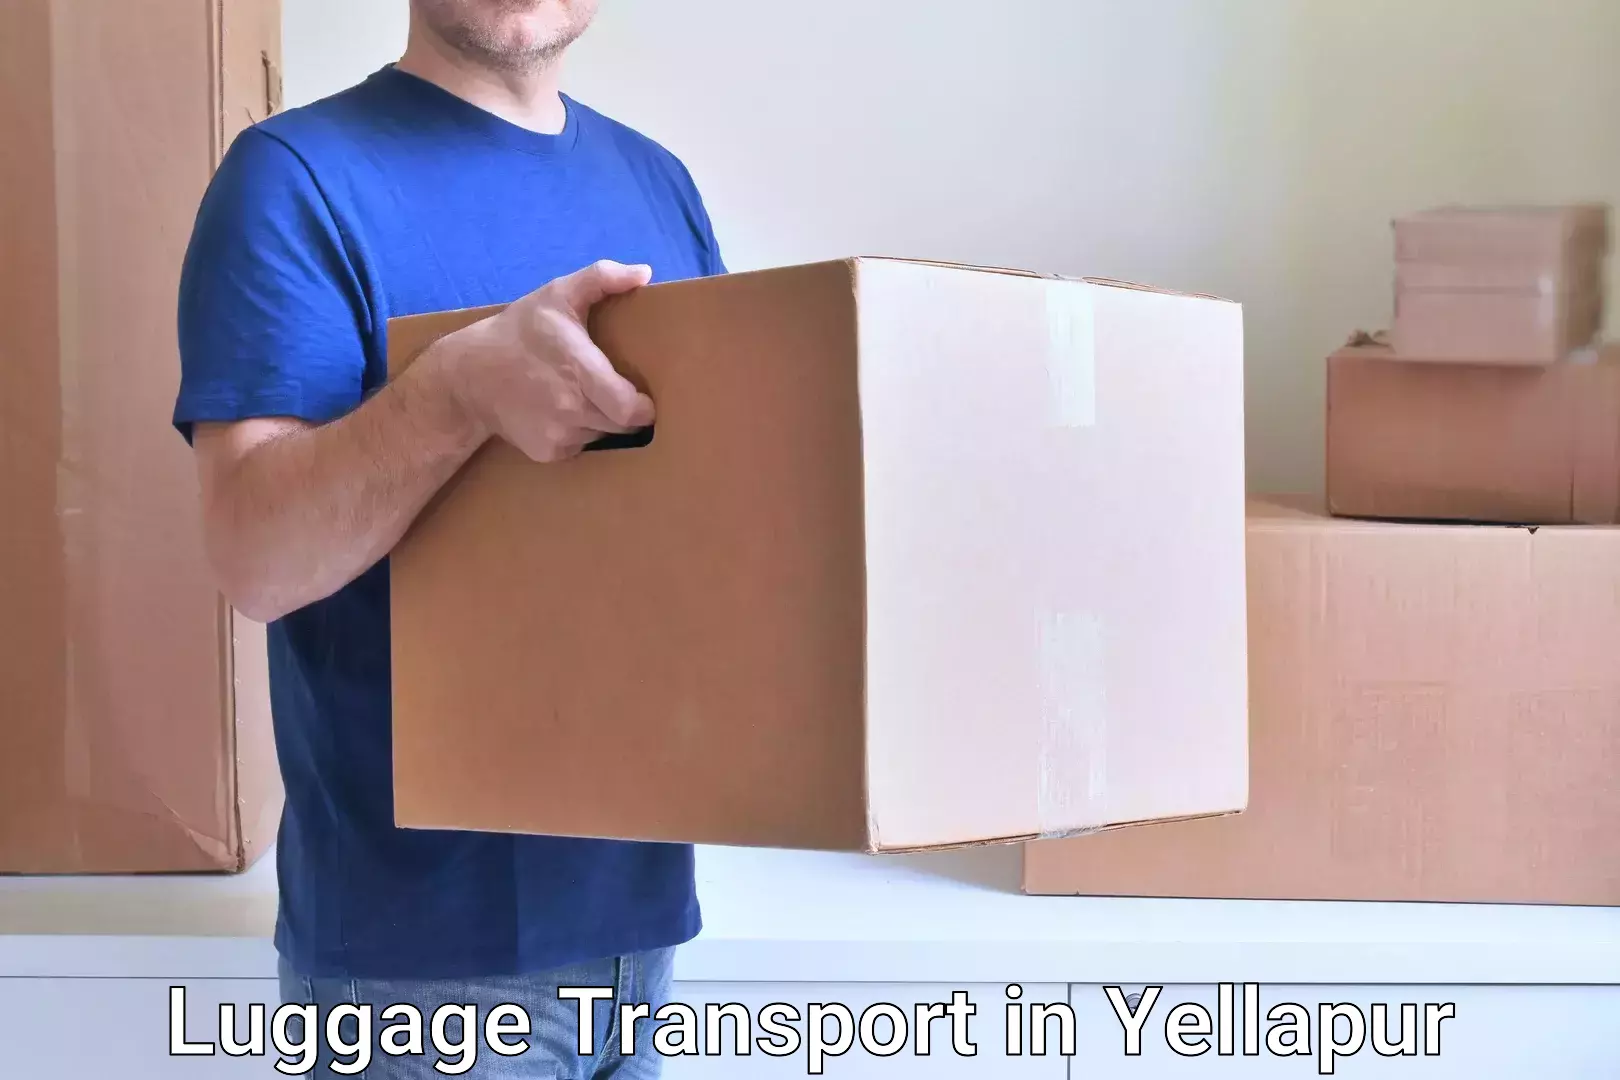 Baggage shipping service in Yellapur